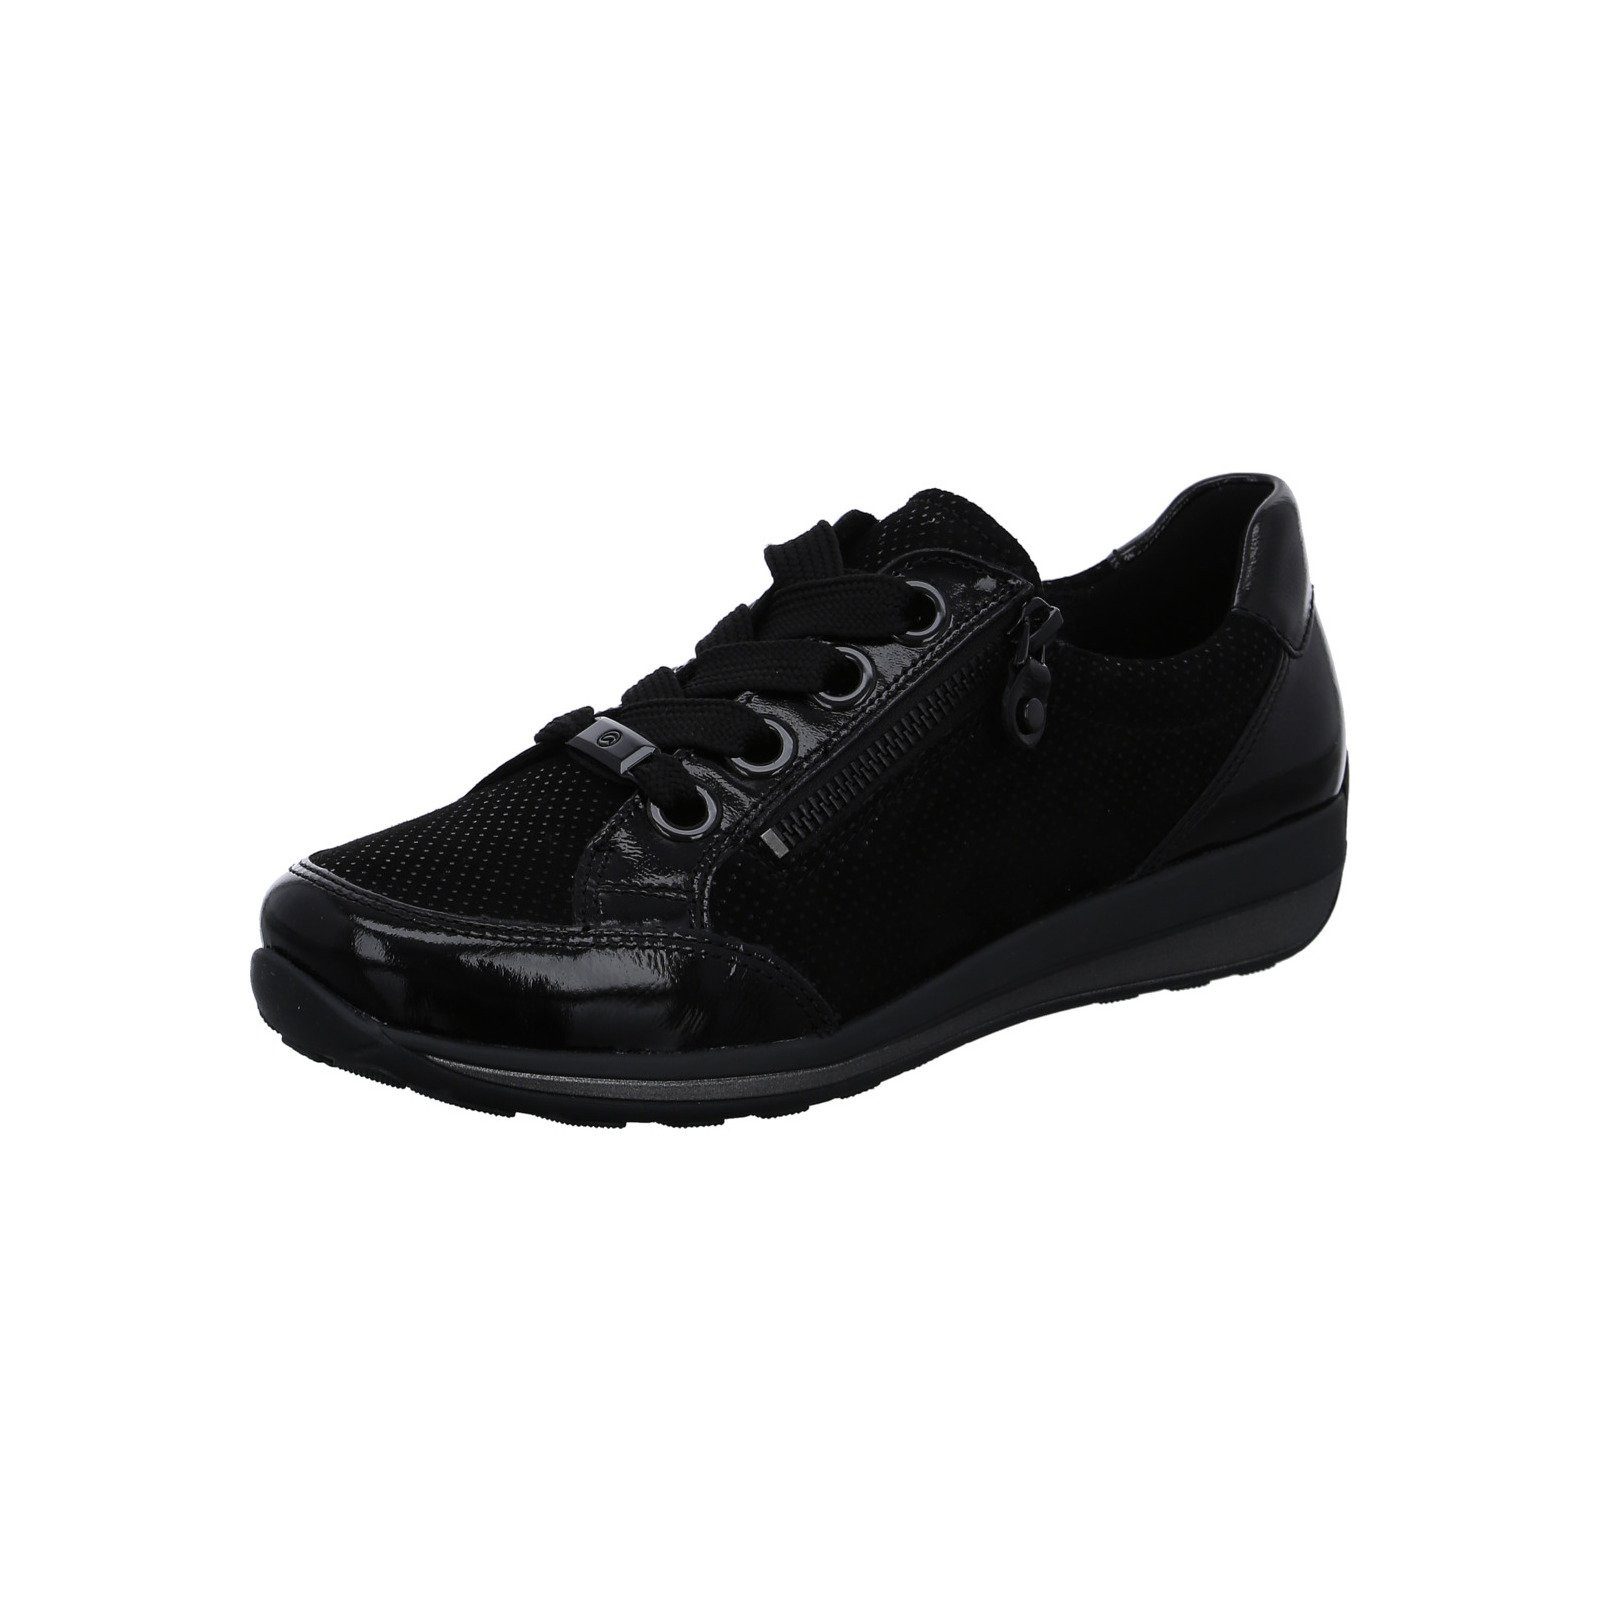 Ara Osaka - Damen Schuhe Sneaker Schnürer Materialmix schwarz